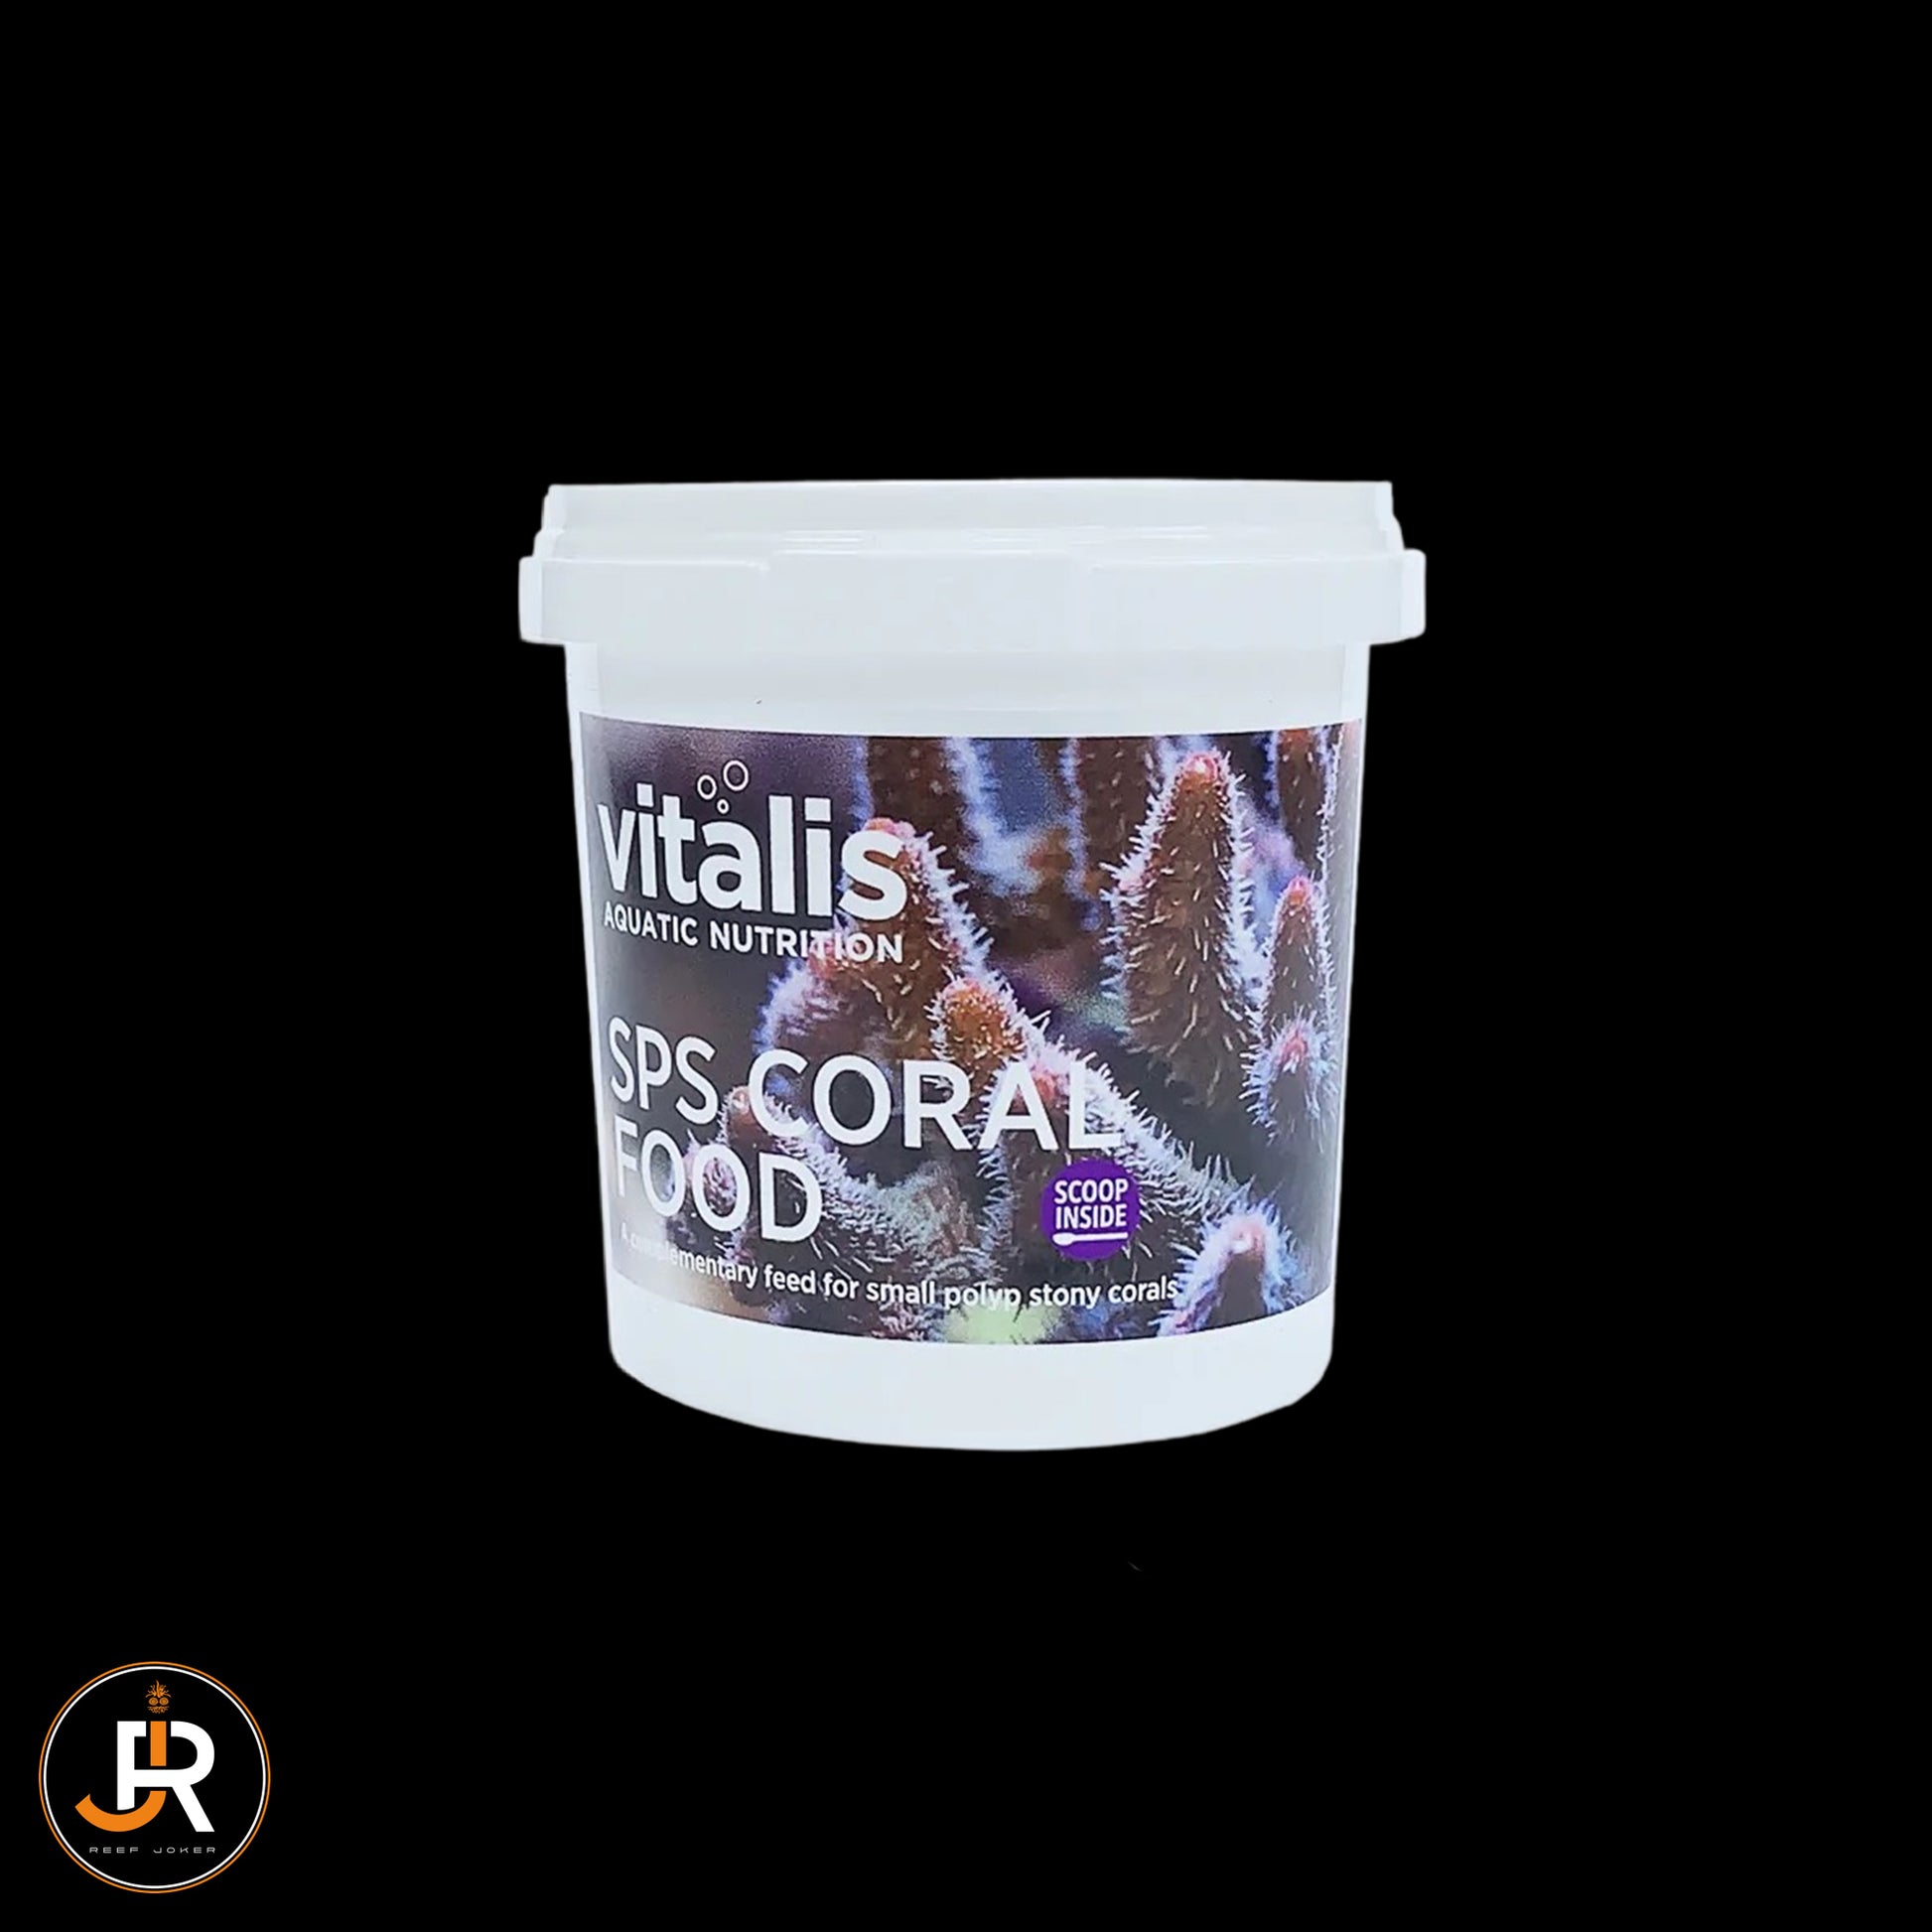 Vitalis - SPS Coral Food 